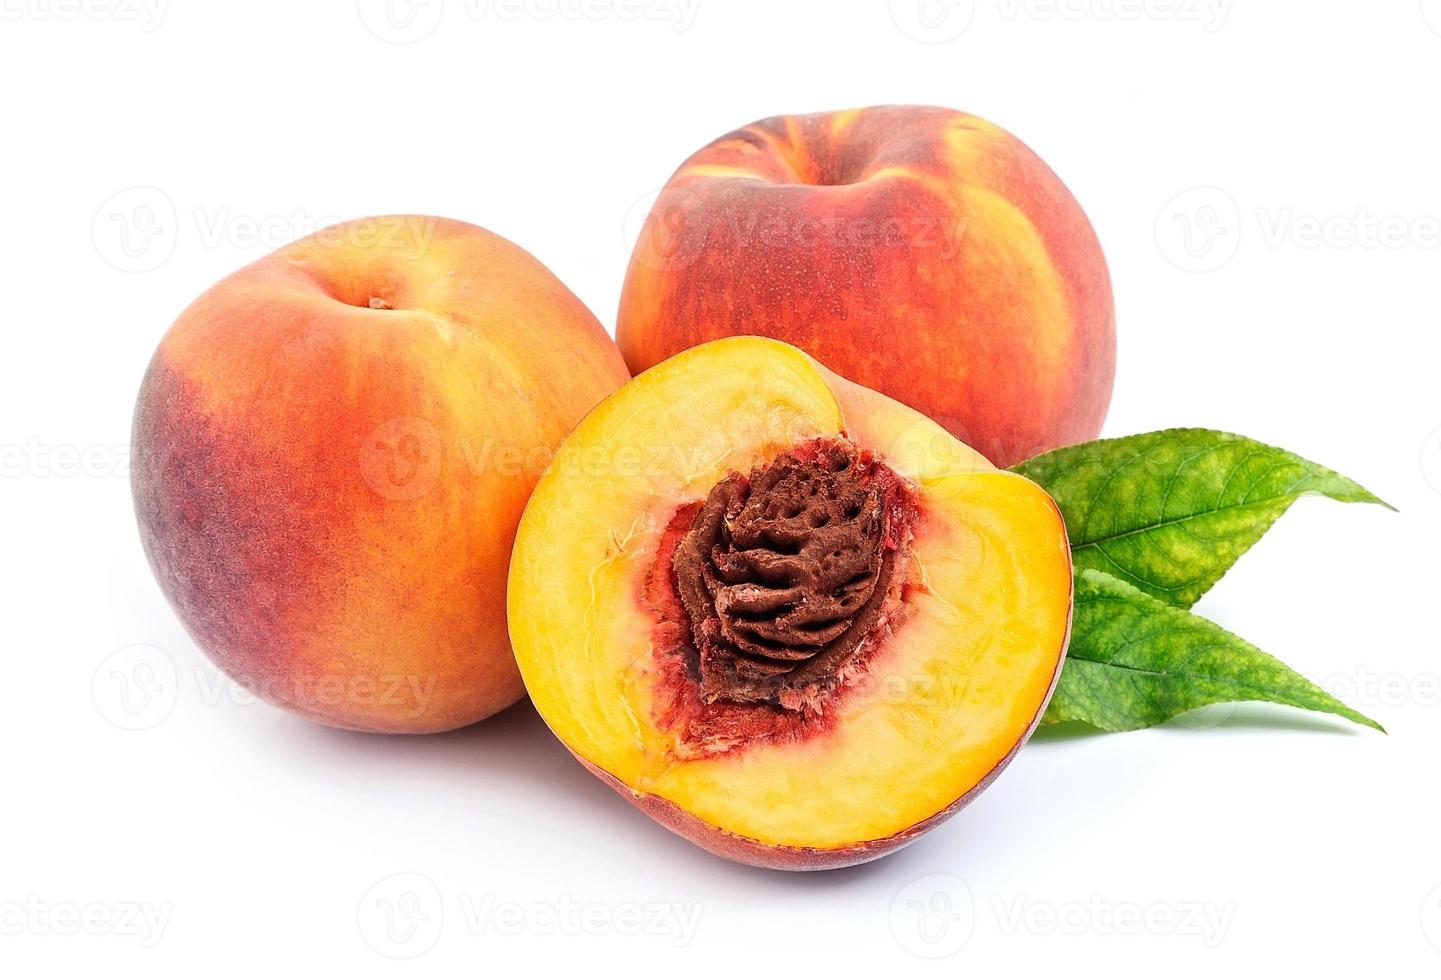 ljuv persika på en vit bakgrund foto